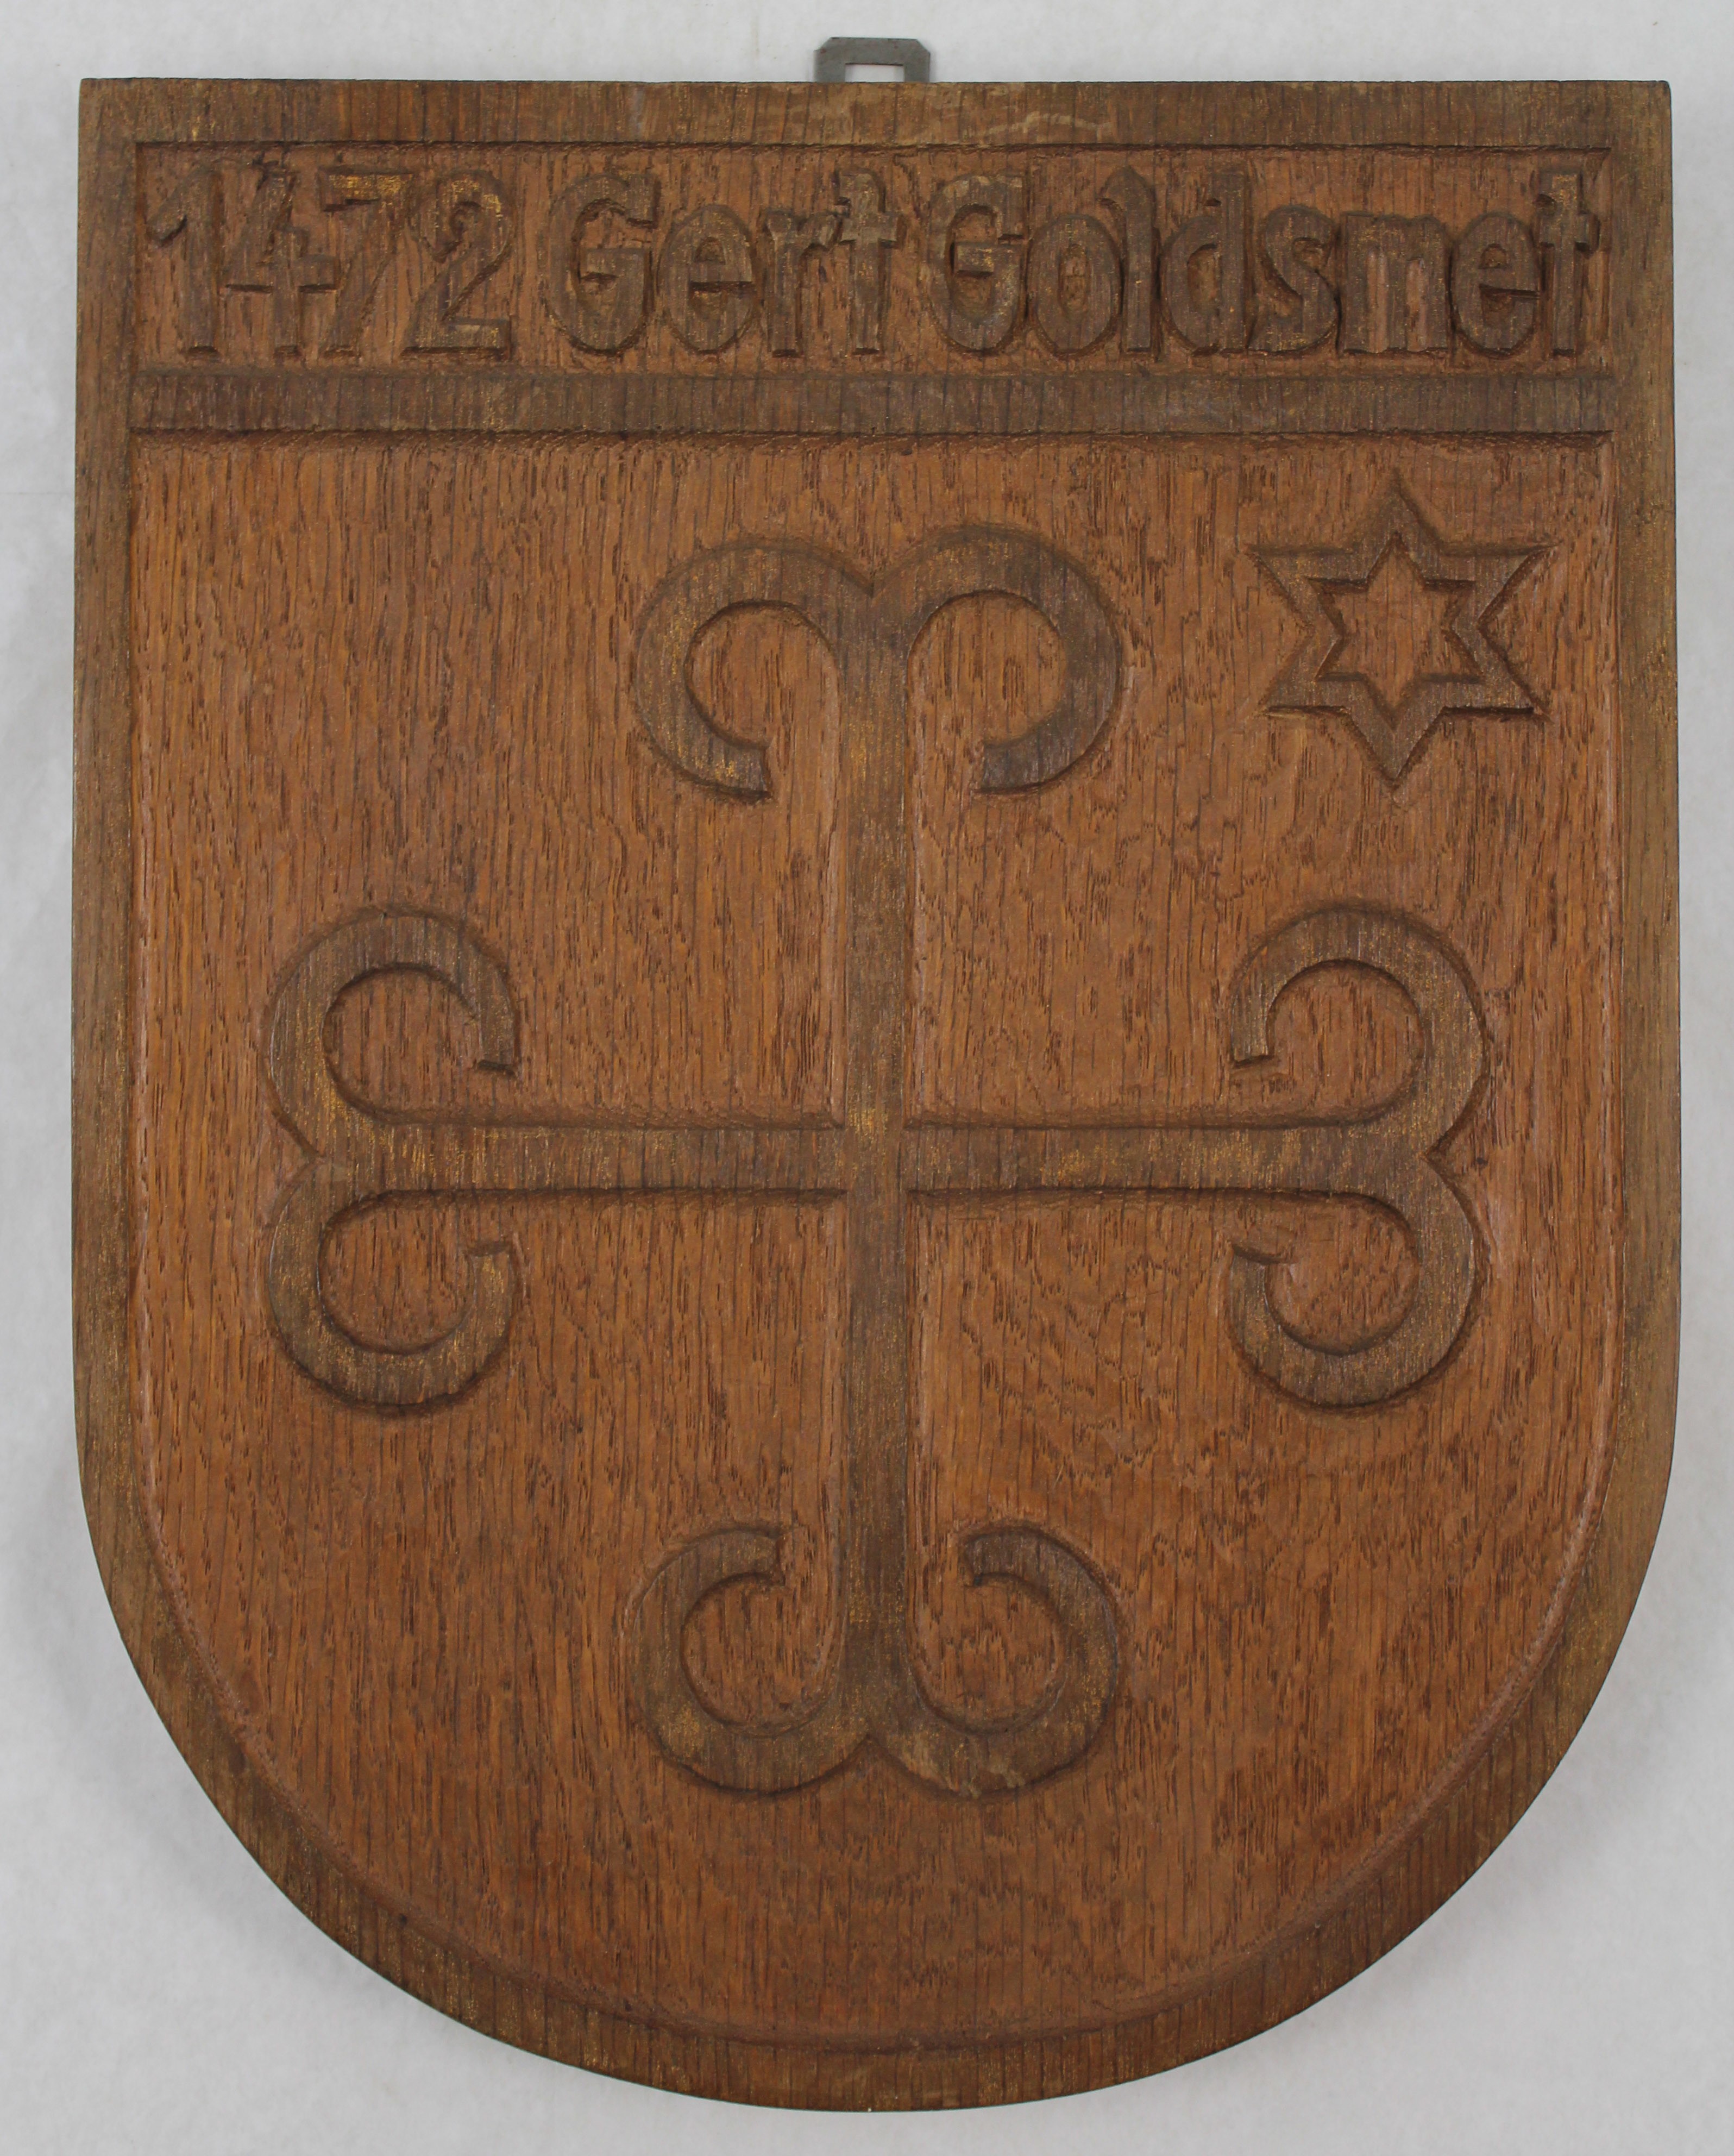 Wappenschild & Hölzernes Wappen mit Hausmarke, Gert Goldsmet 1472 (Hellweg-Museum Unna CC BY-NC-SA)